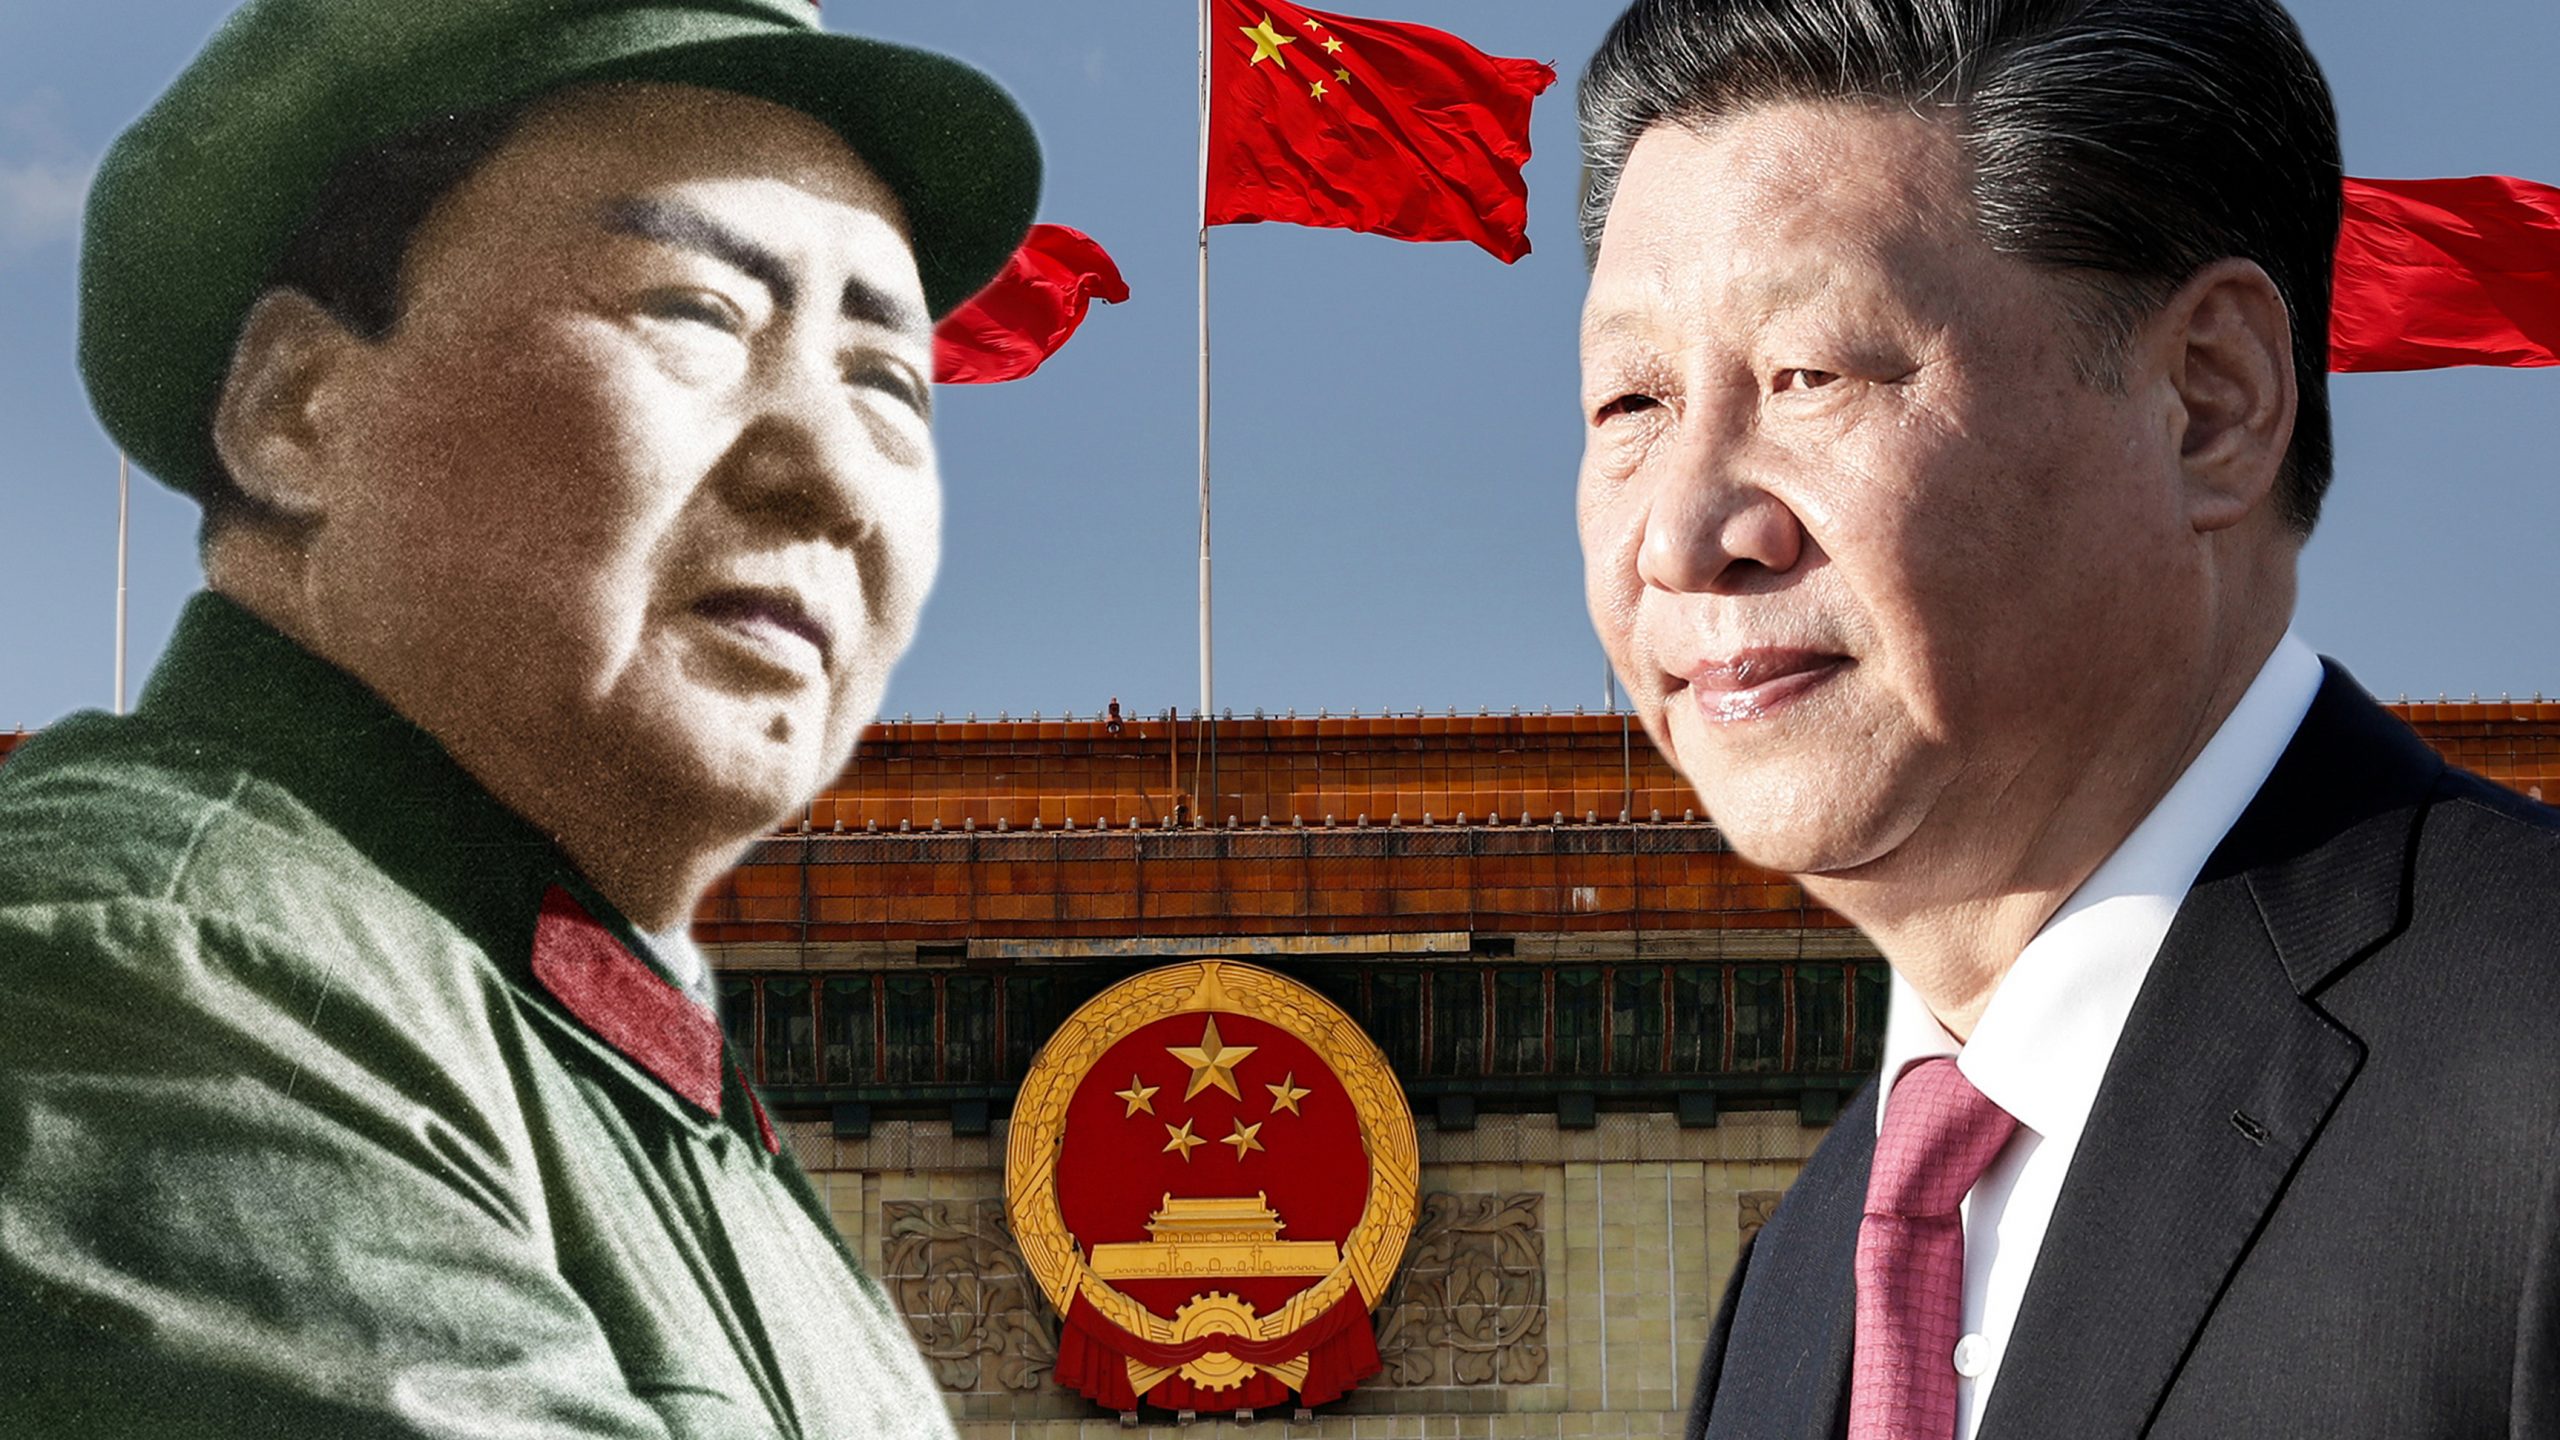 Celebrazione per i 100 anni del PCC. Xi Jinping come Mao Zedong